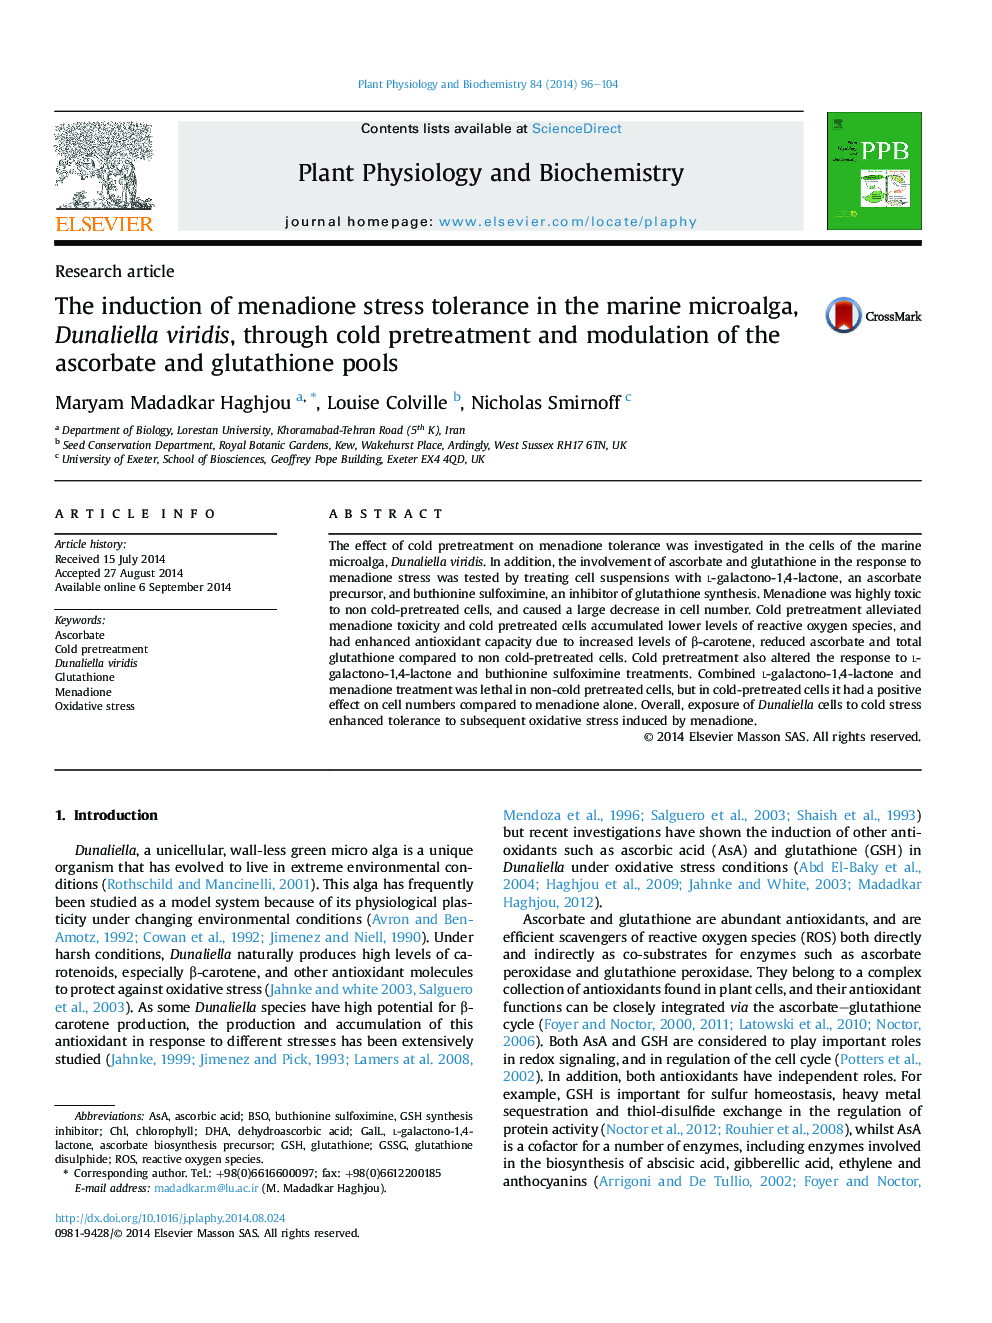 The induction of menadione stress tolerance in the marine microalga, Dunaliella viridis, through cold pretreatment and modulation of the ascorbate and glutathione pools